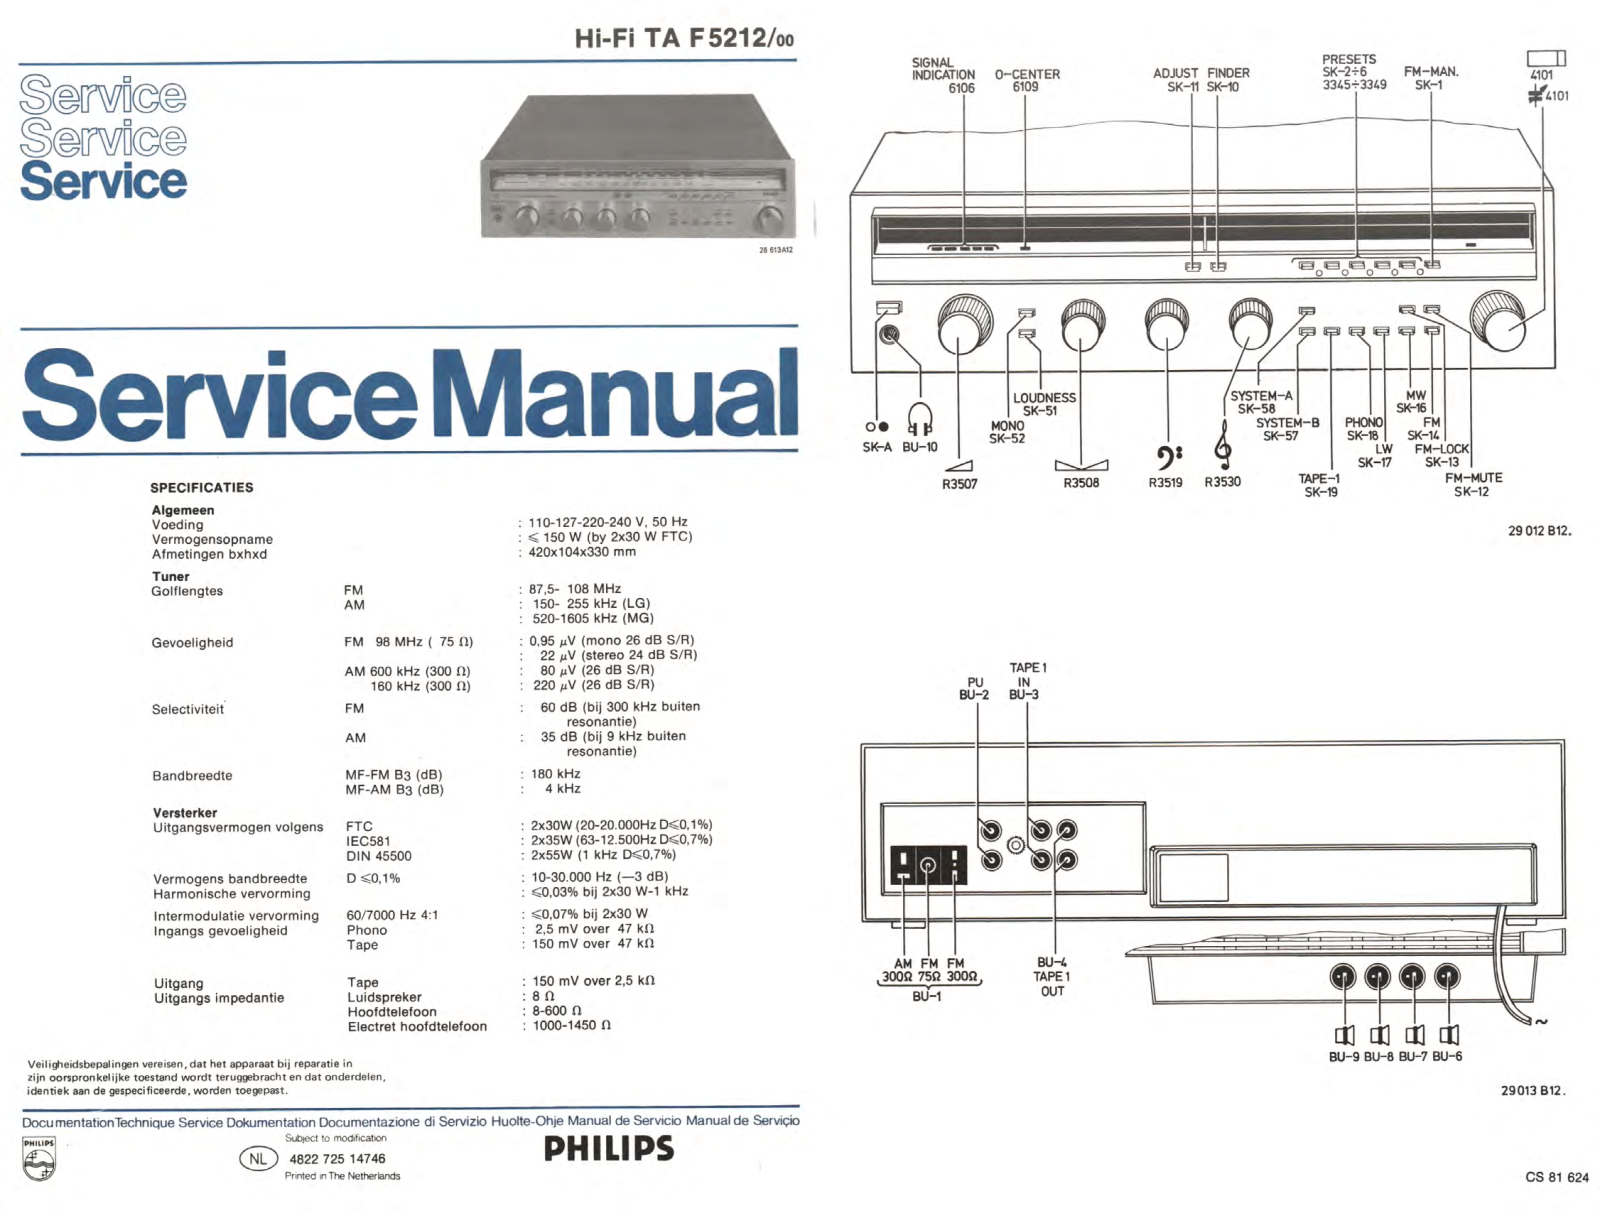 Philips F-5212 Service Manual